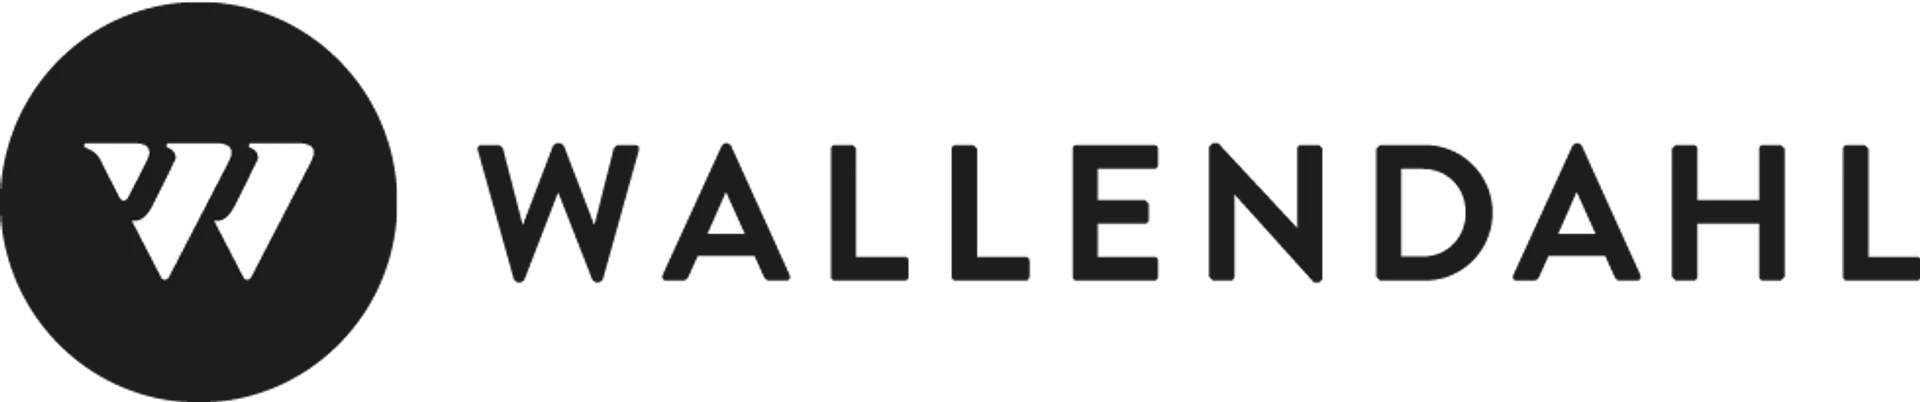 WALLENDAHL logo